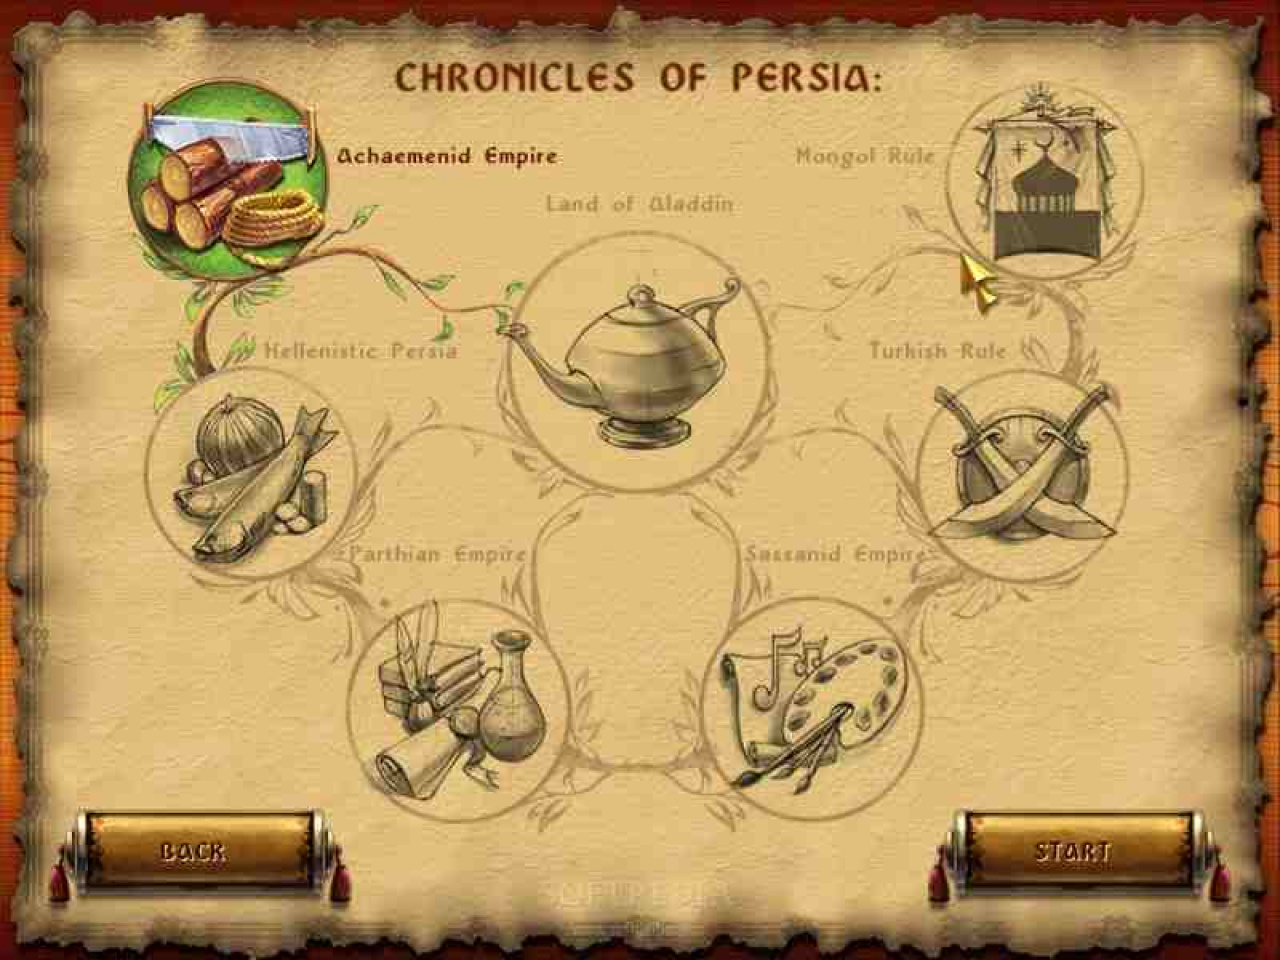 cradle of persia game torrent